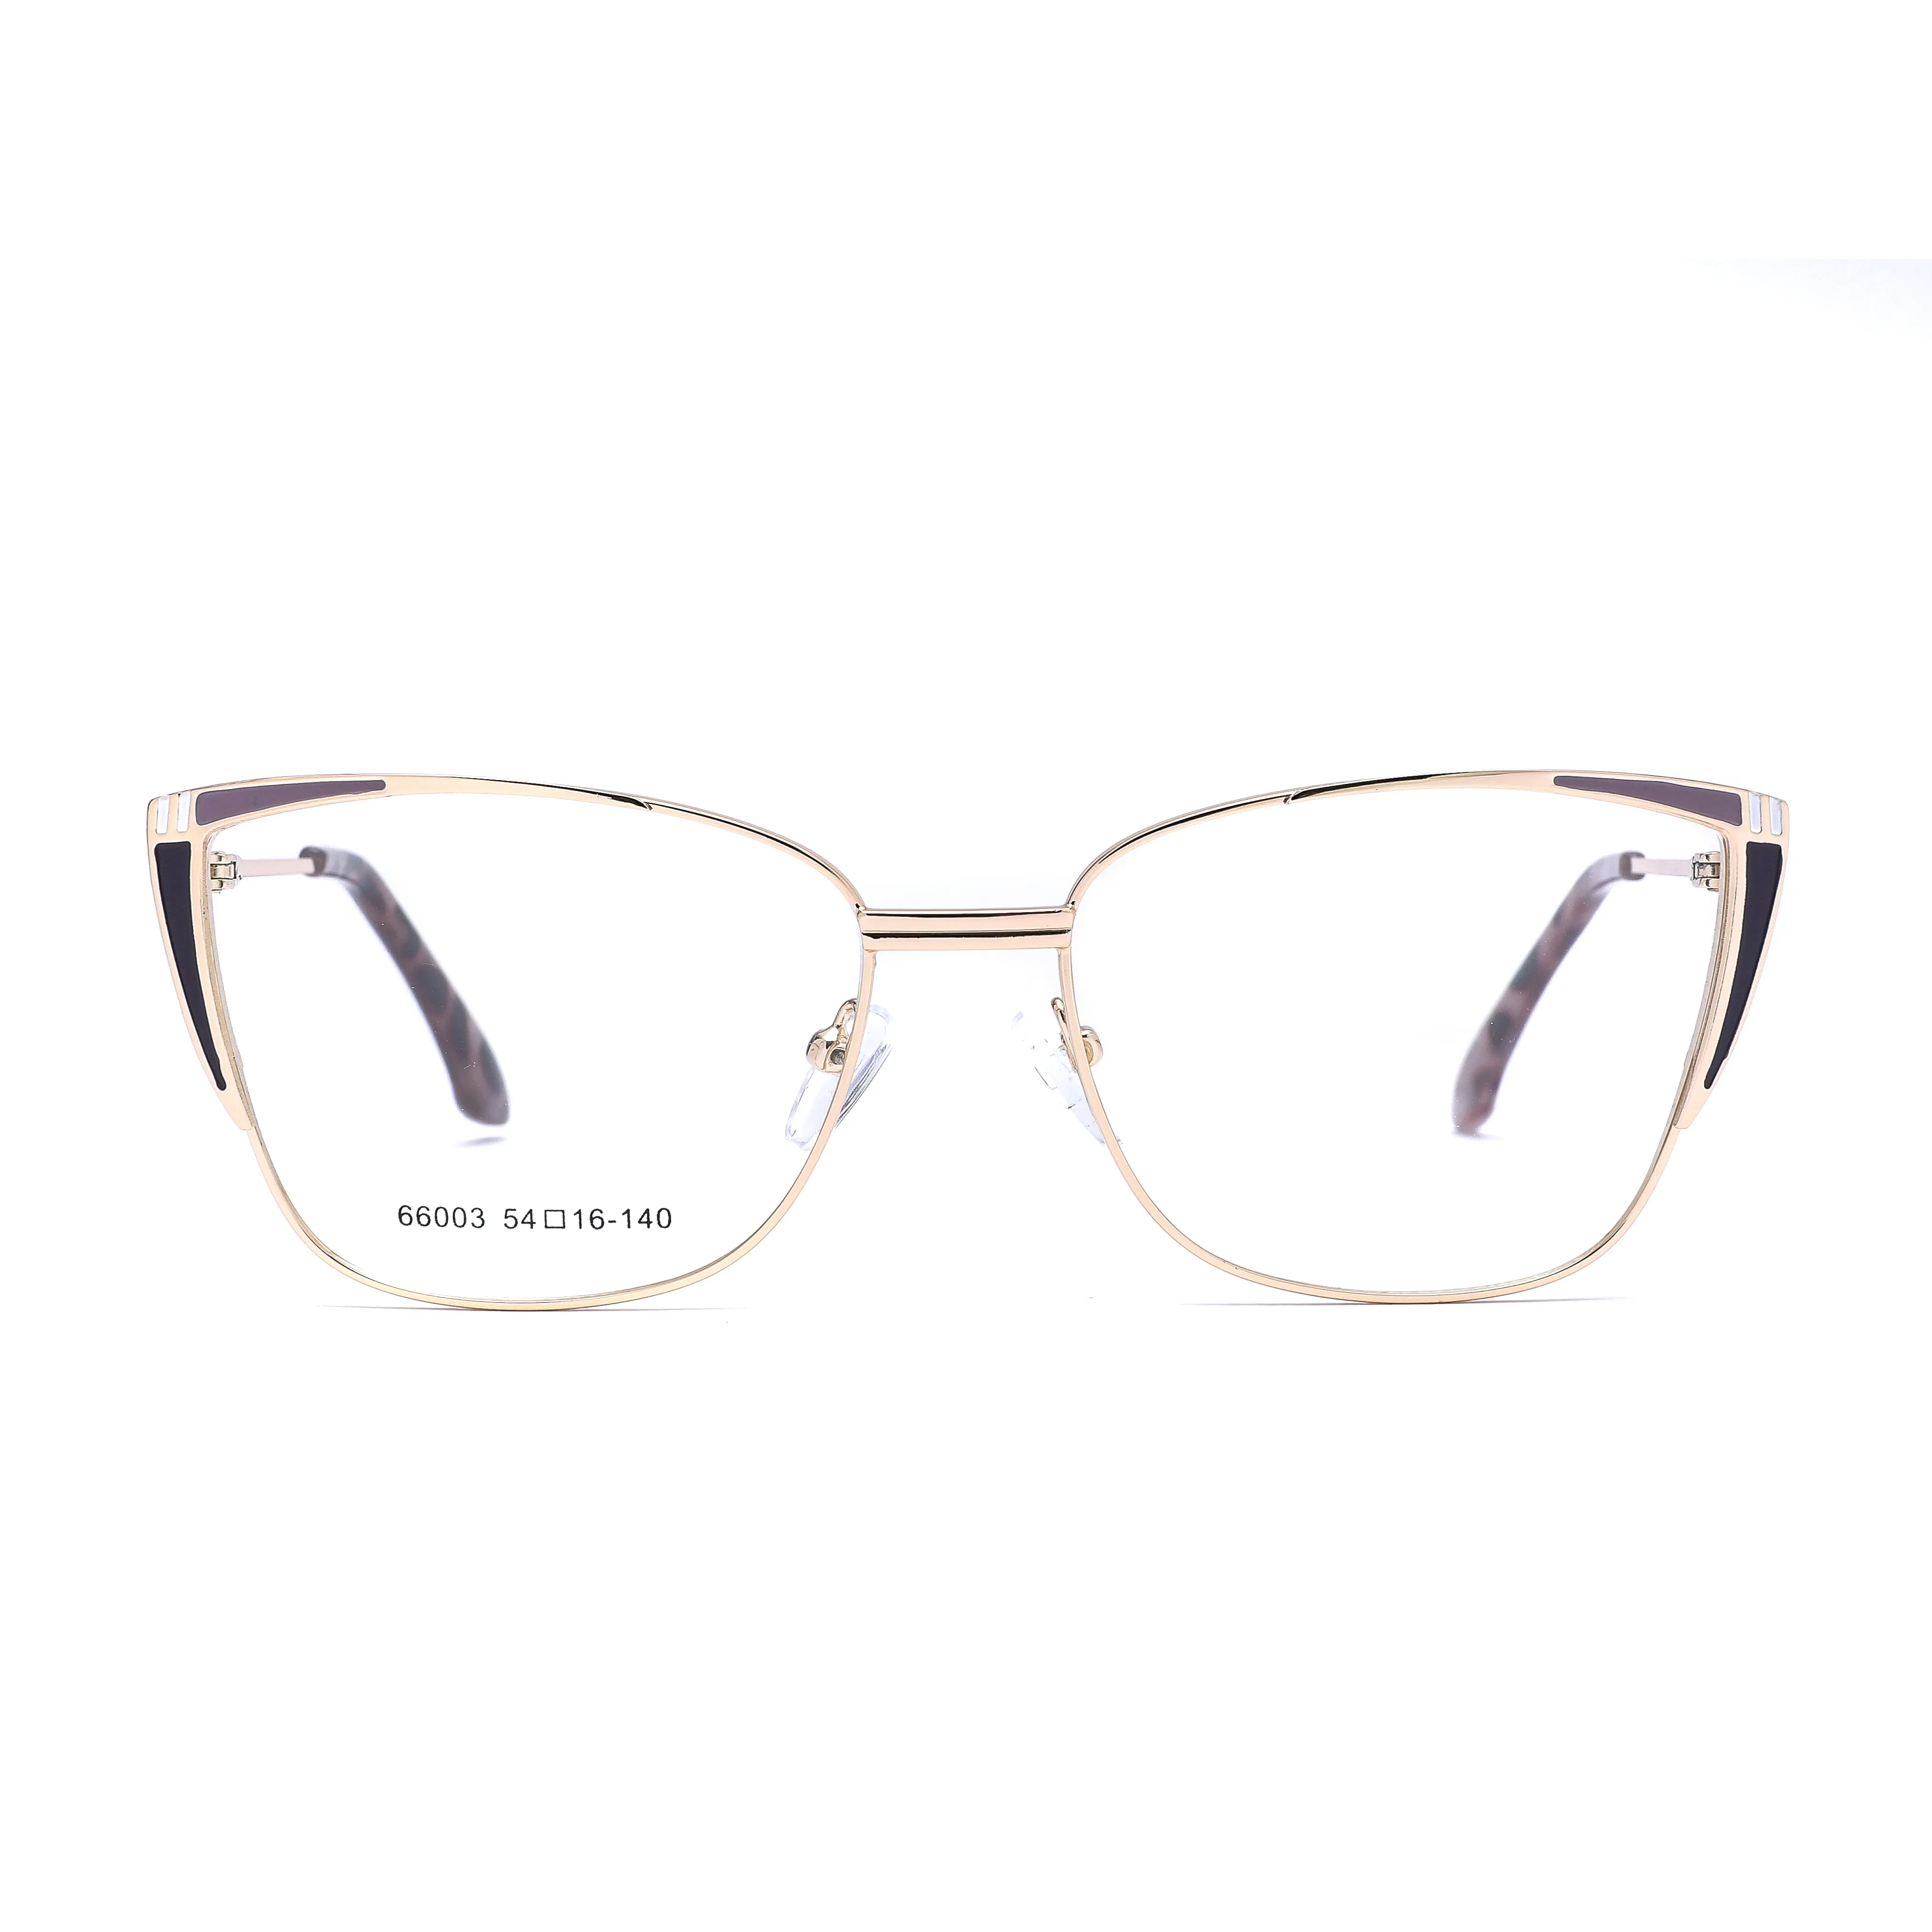 NEW Arrival Fashion Women's Metal Eyeglasses Frames Cat Eye Style Colorful Optical Spectacles Frames eyewear wholesale